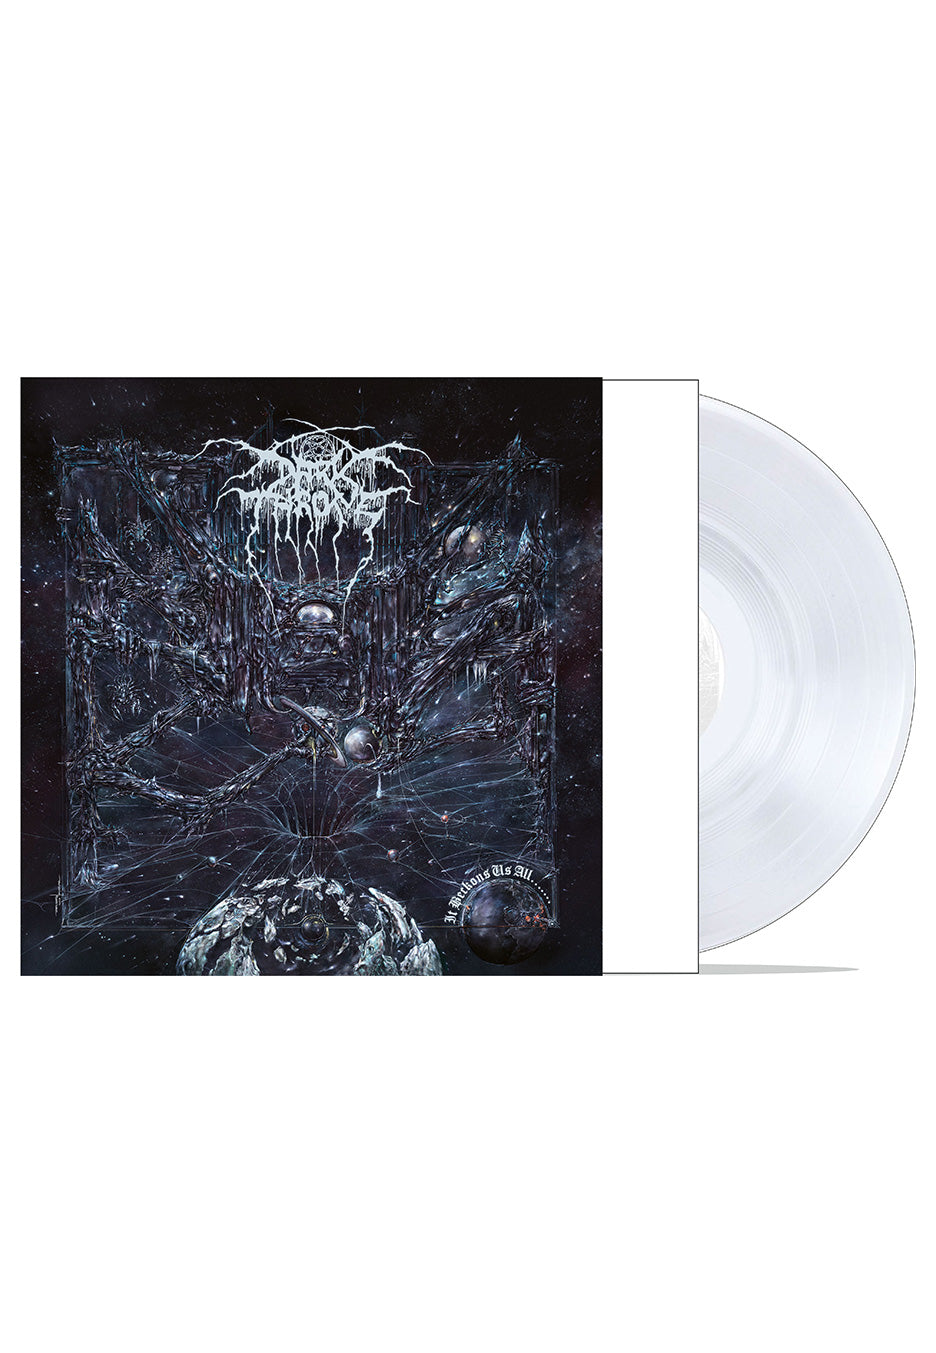 Darkthrone - It Beckons Us All Ltd. Crystal Clear - Colored Vinyl